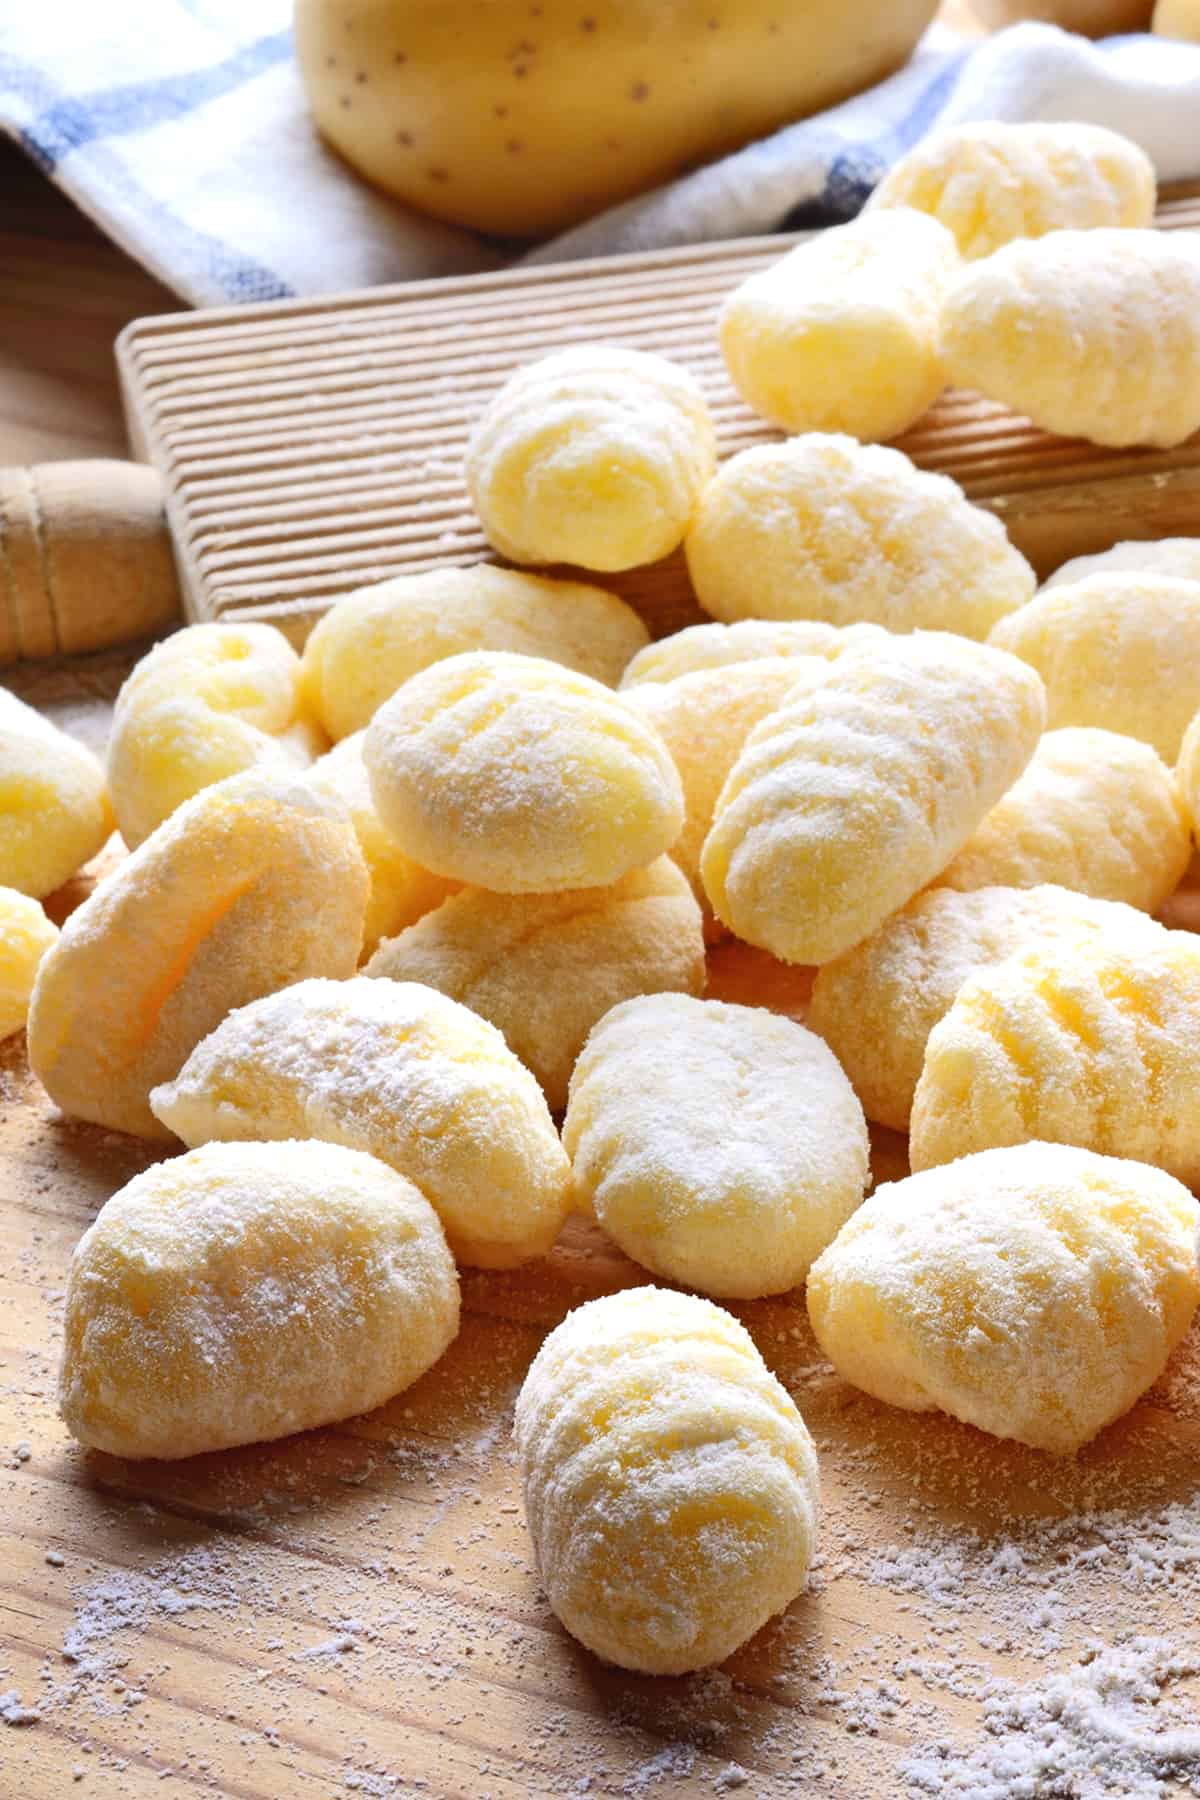 potato gnocchi recipe homemade how to make authentic traditional italian